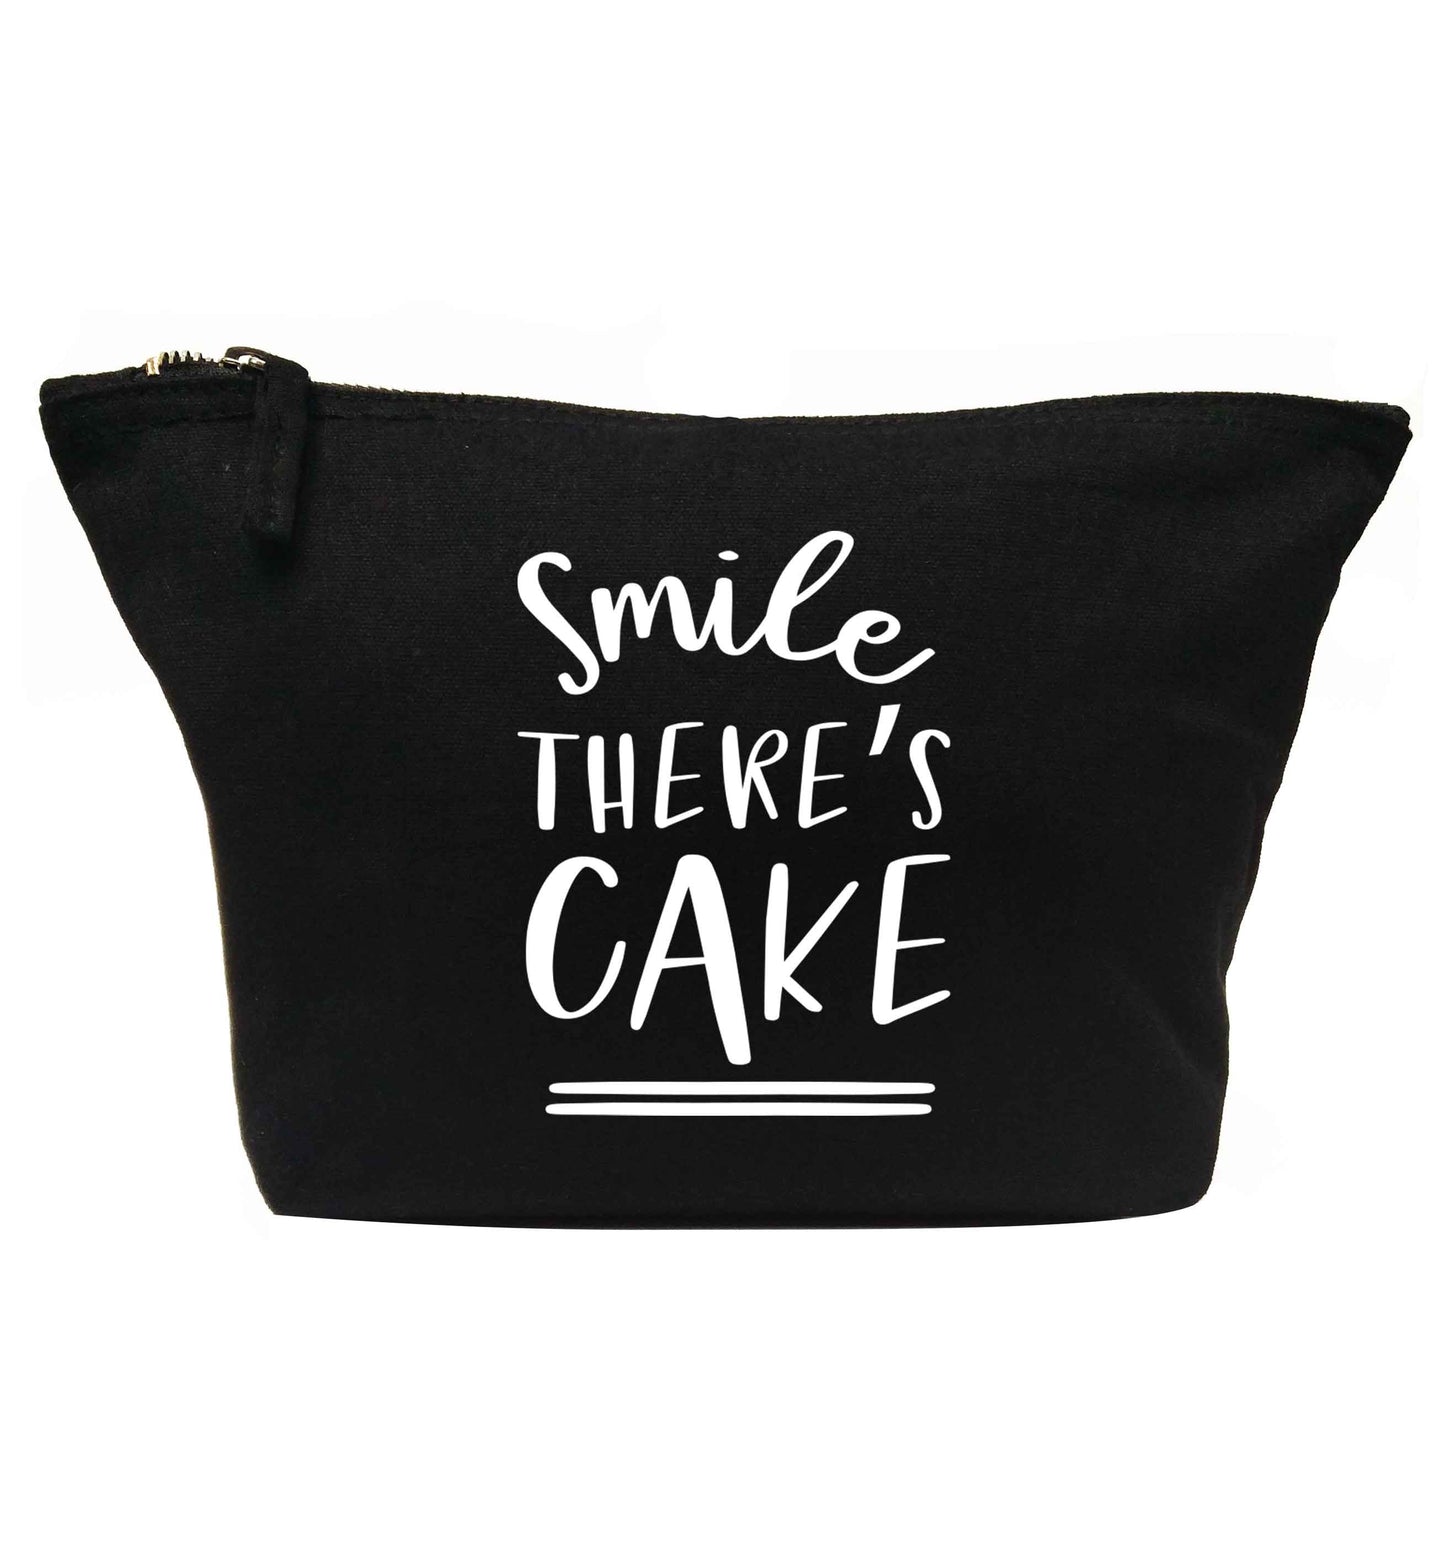 Smile there's cake | makeup / wash bag